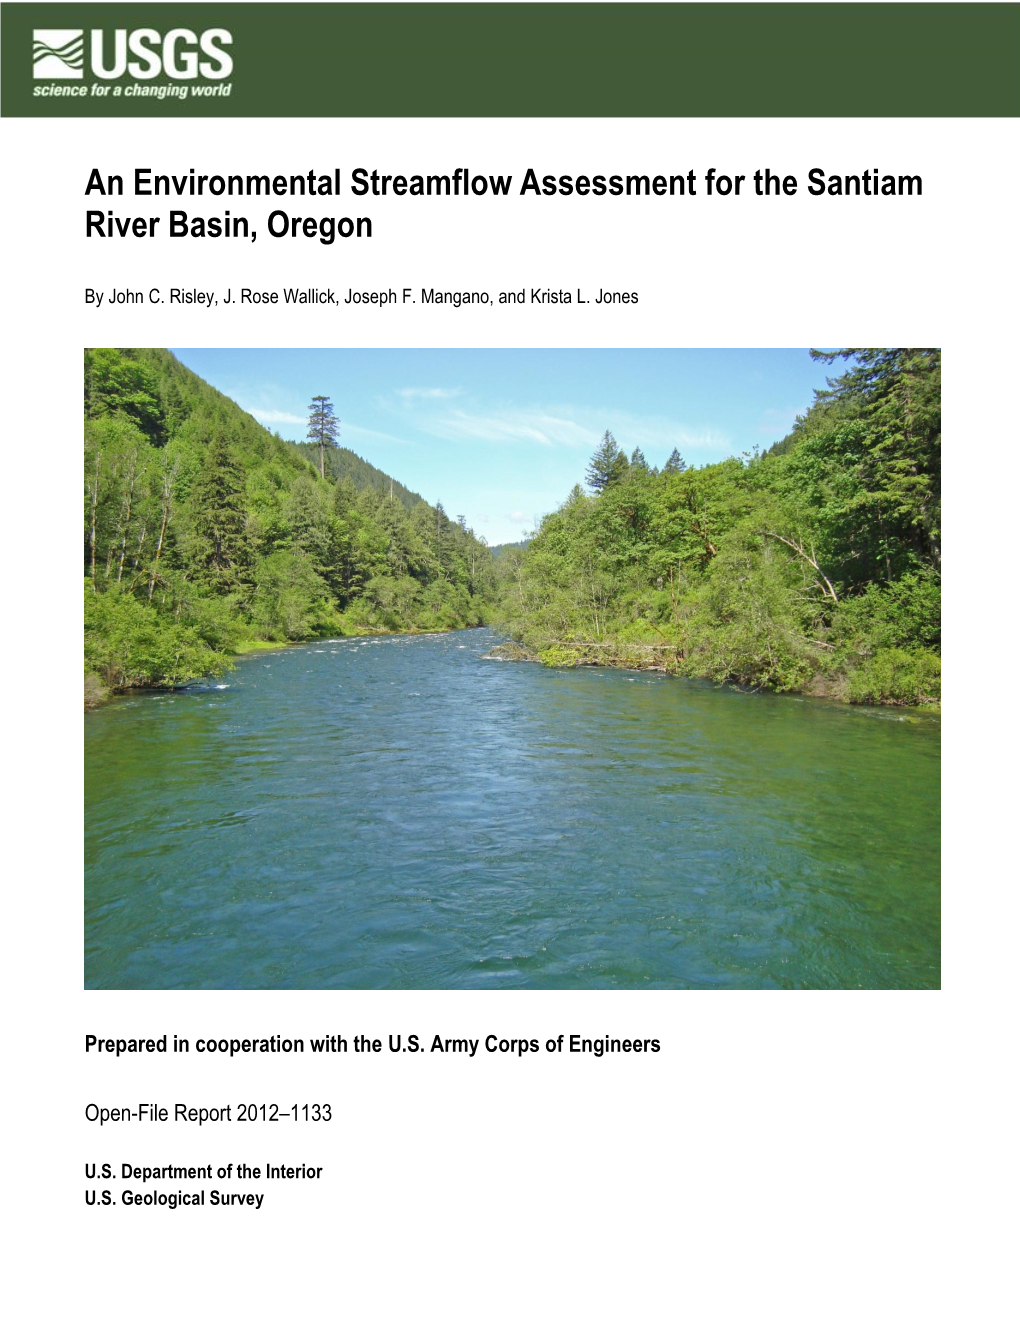 An Environmental Streamflow Assessment for the Santiam River Basin, Oregon